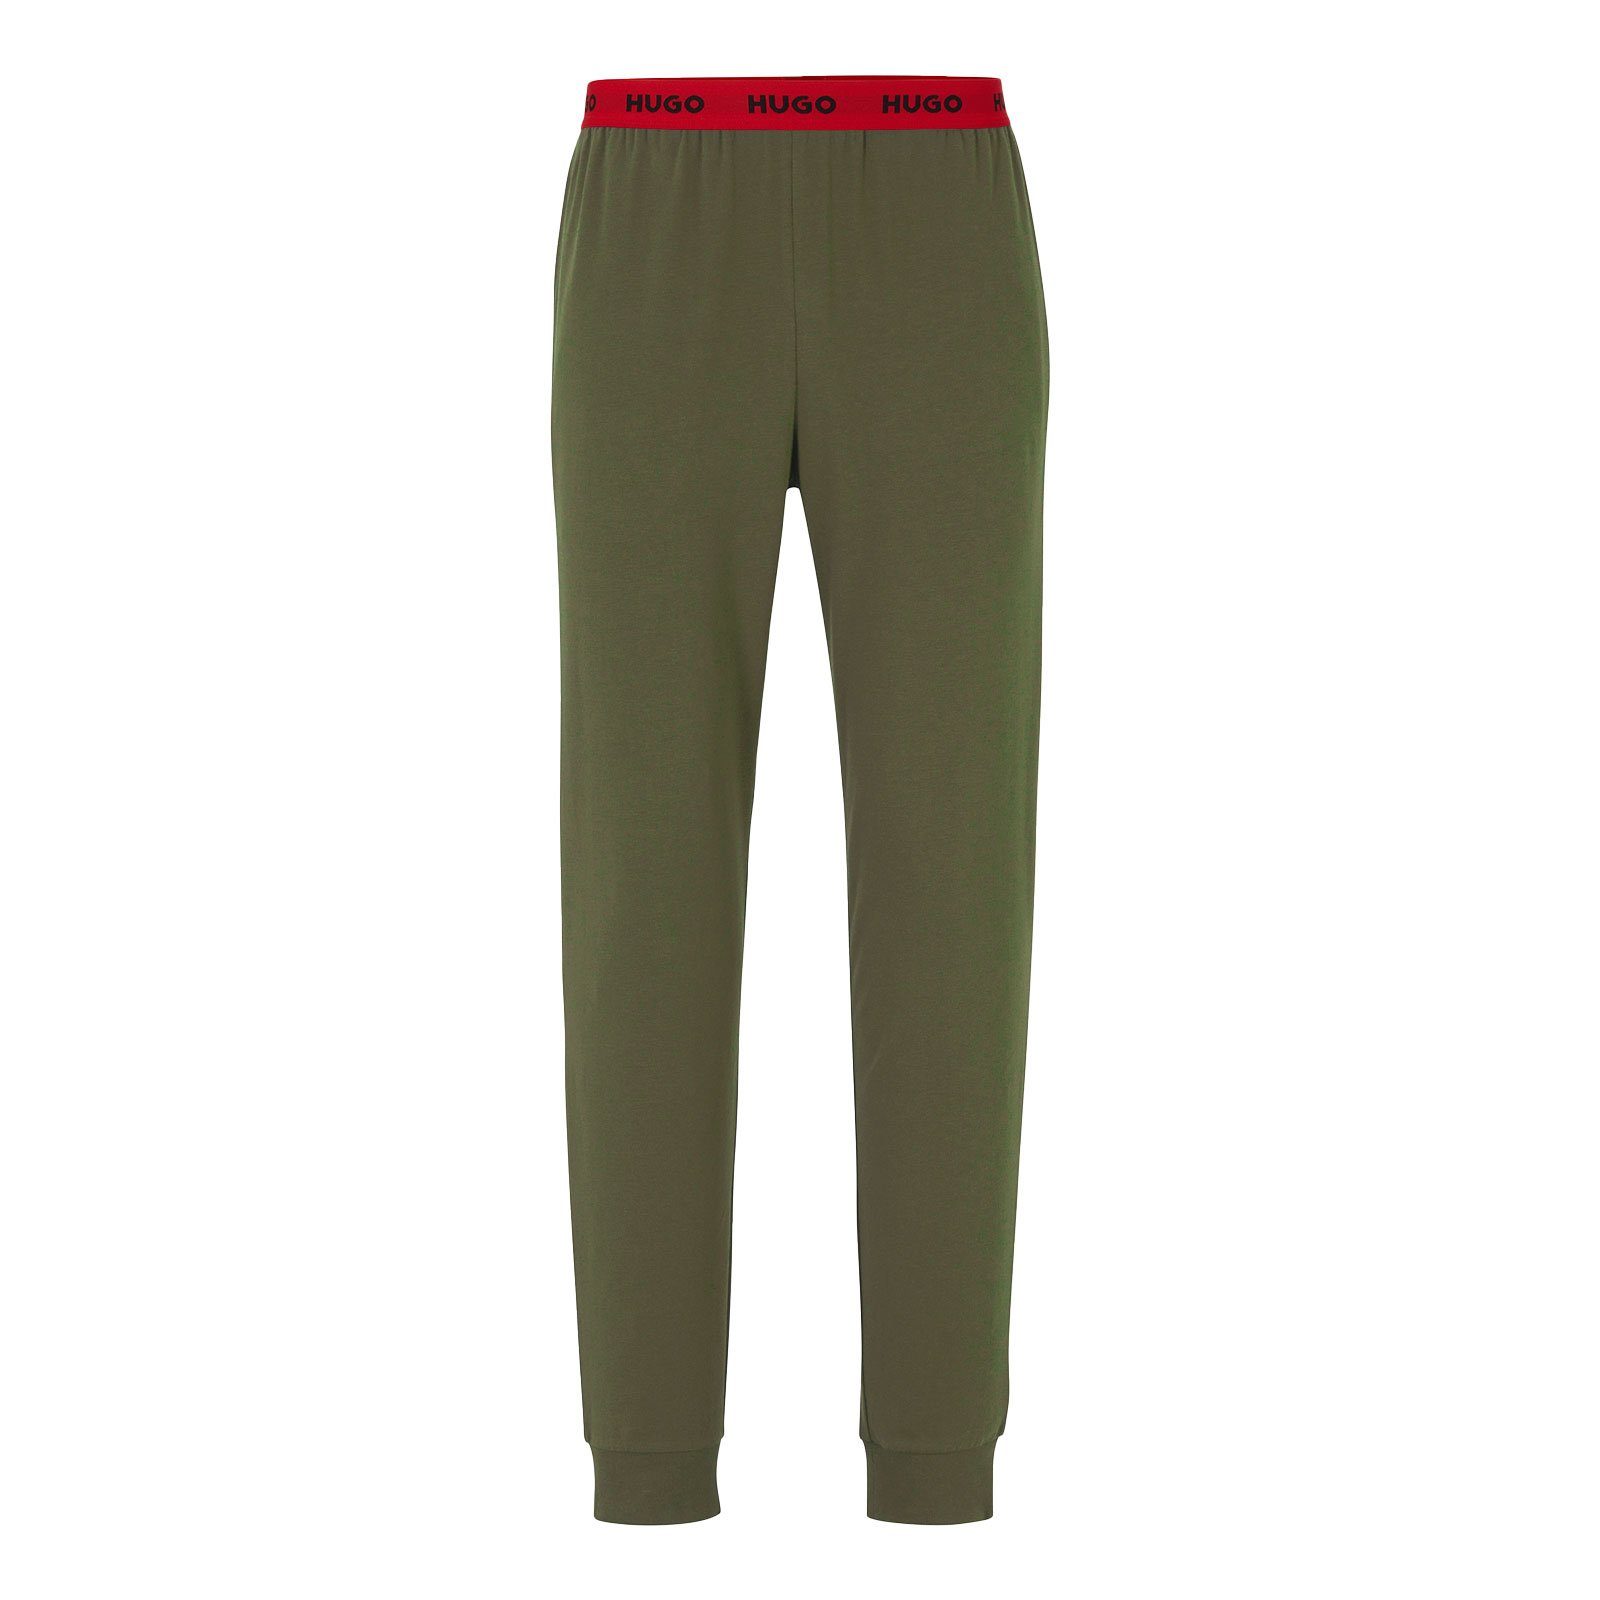 HUGO Pyjamahose Linked Pants mit sichtbarem Elastikbund 345 open green